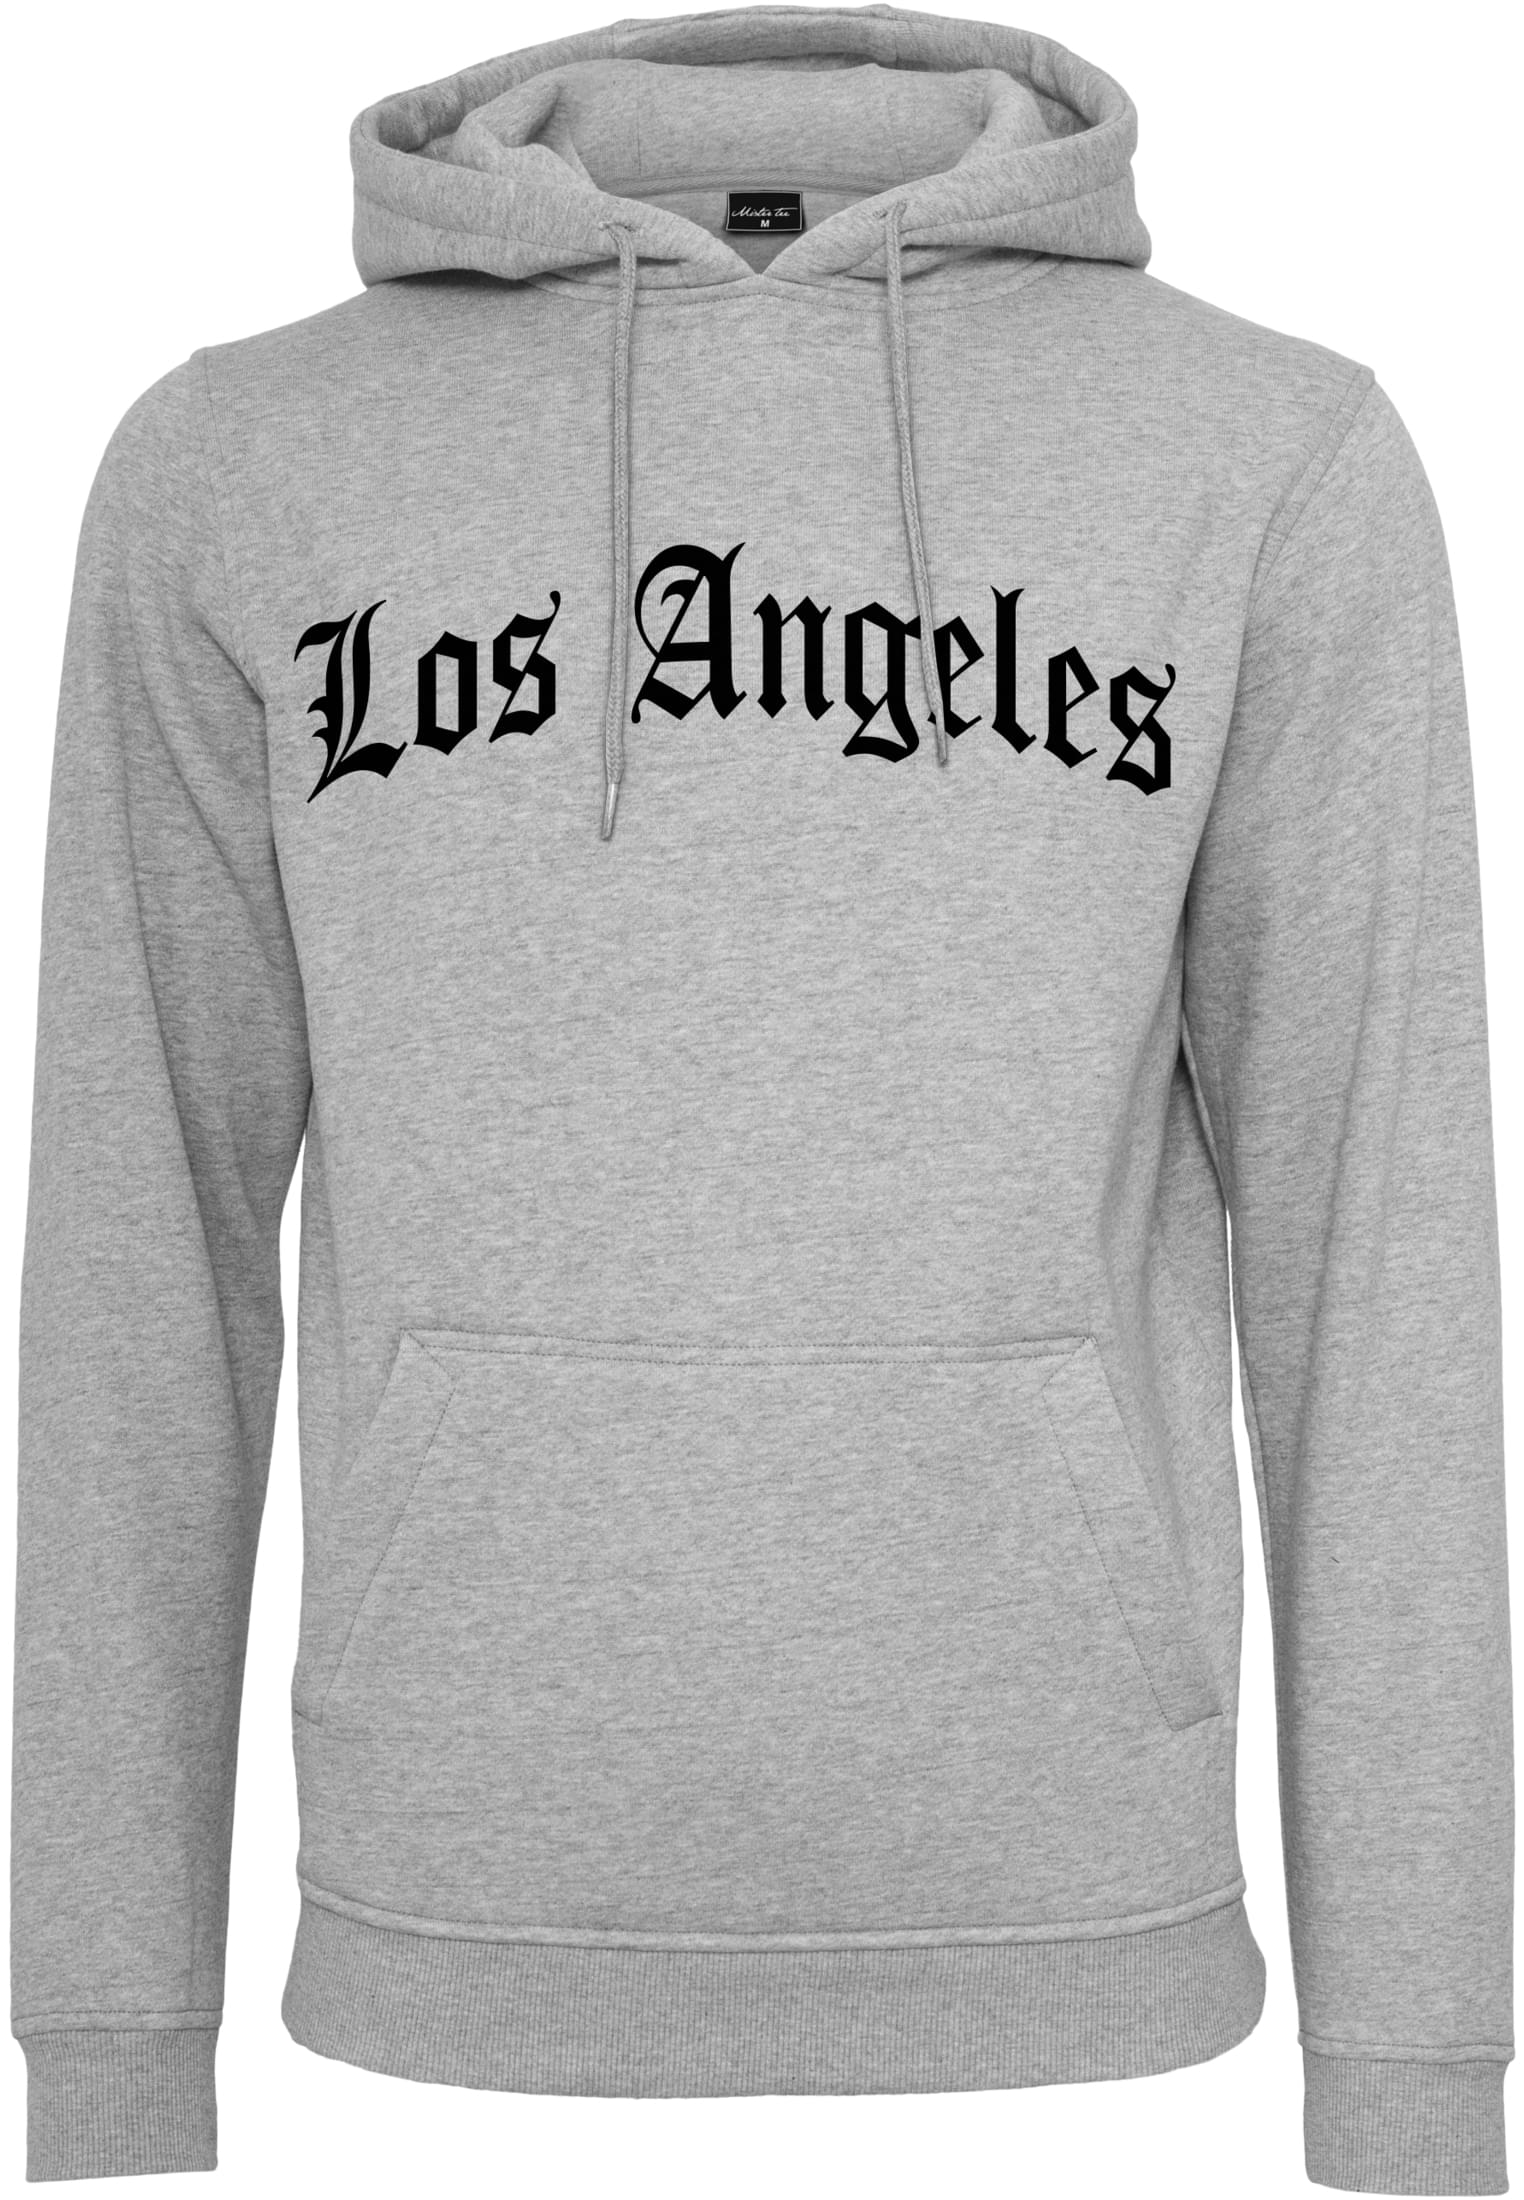 Los Angeles text Hoody heather grey